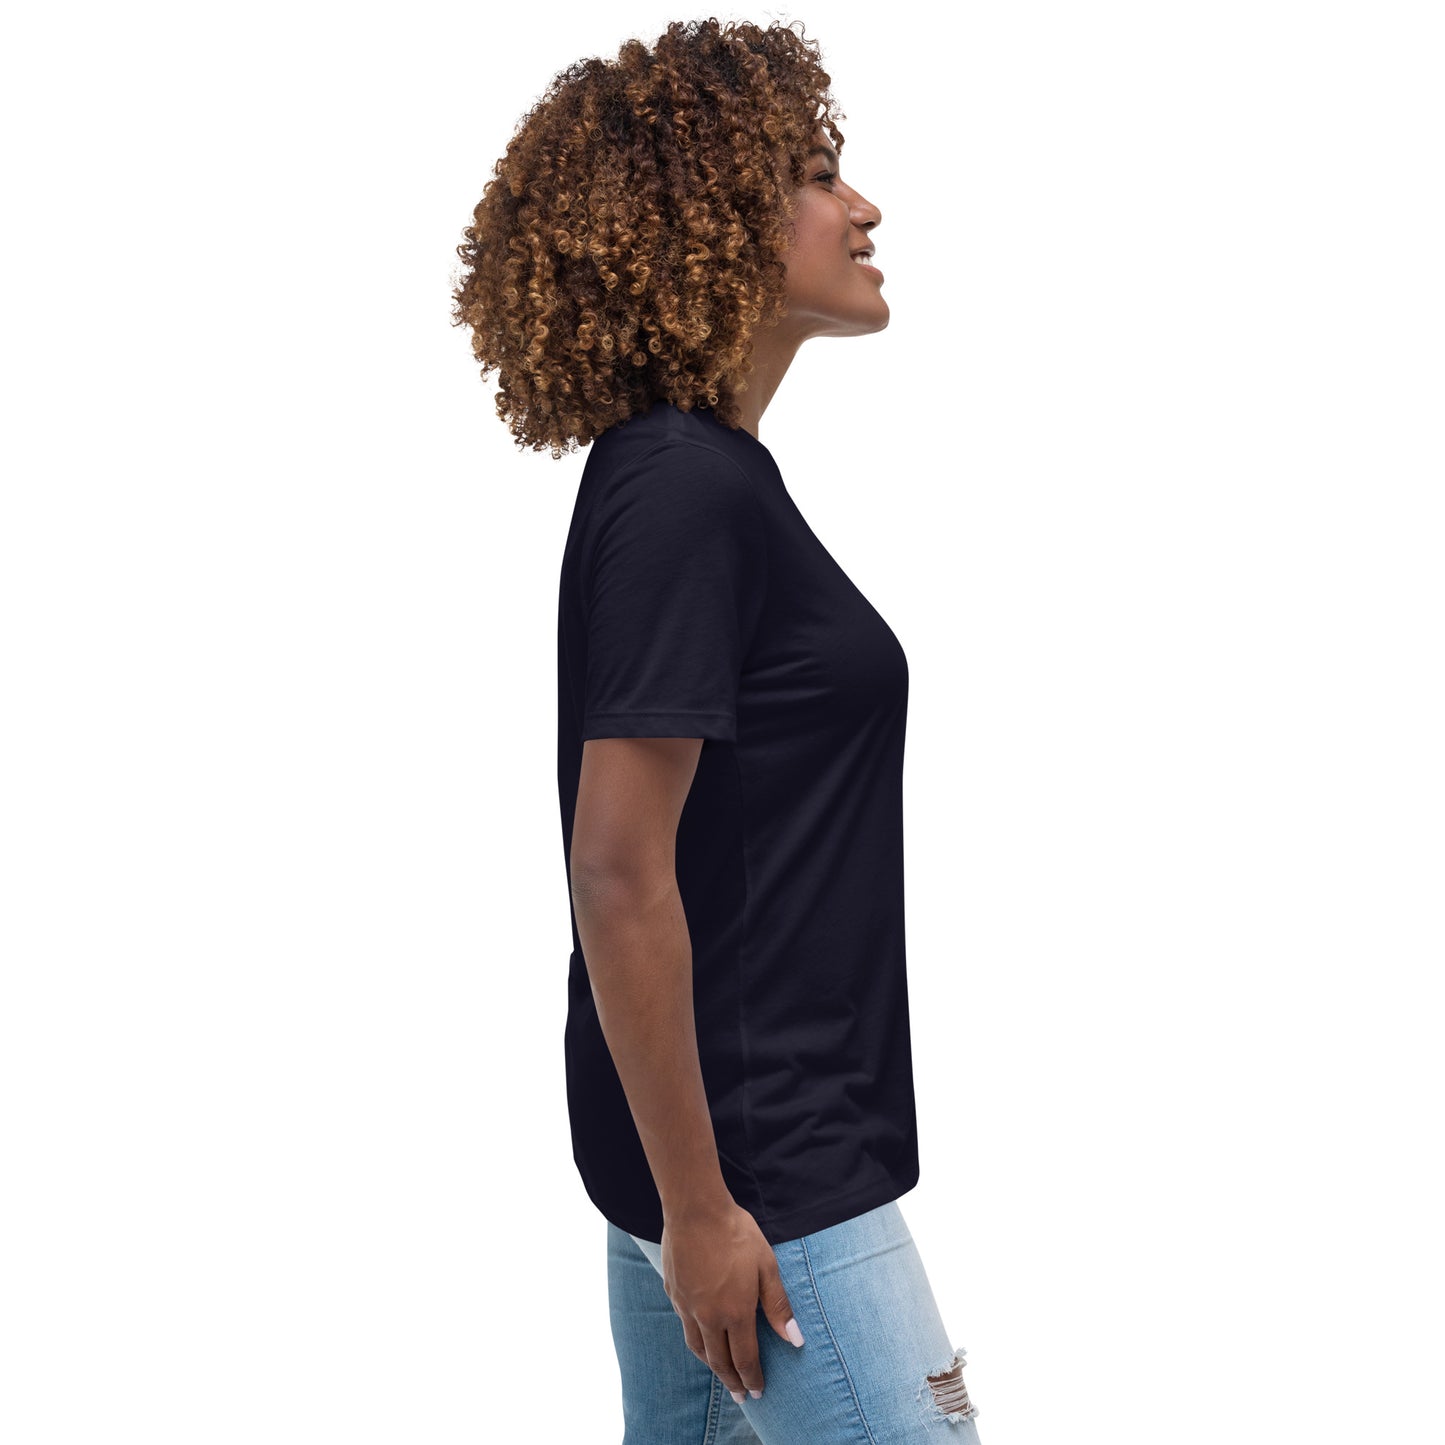 Women's Dark Color T-Shirt